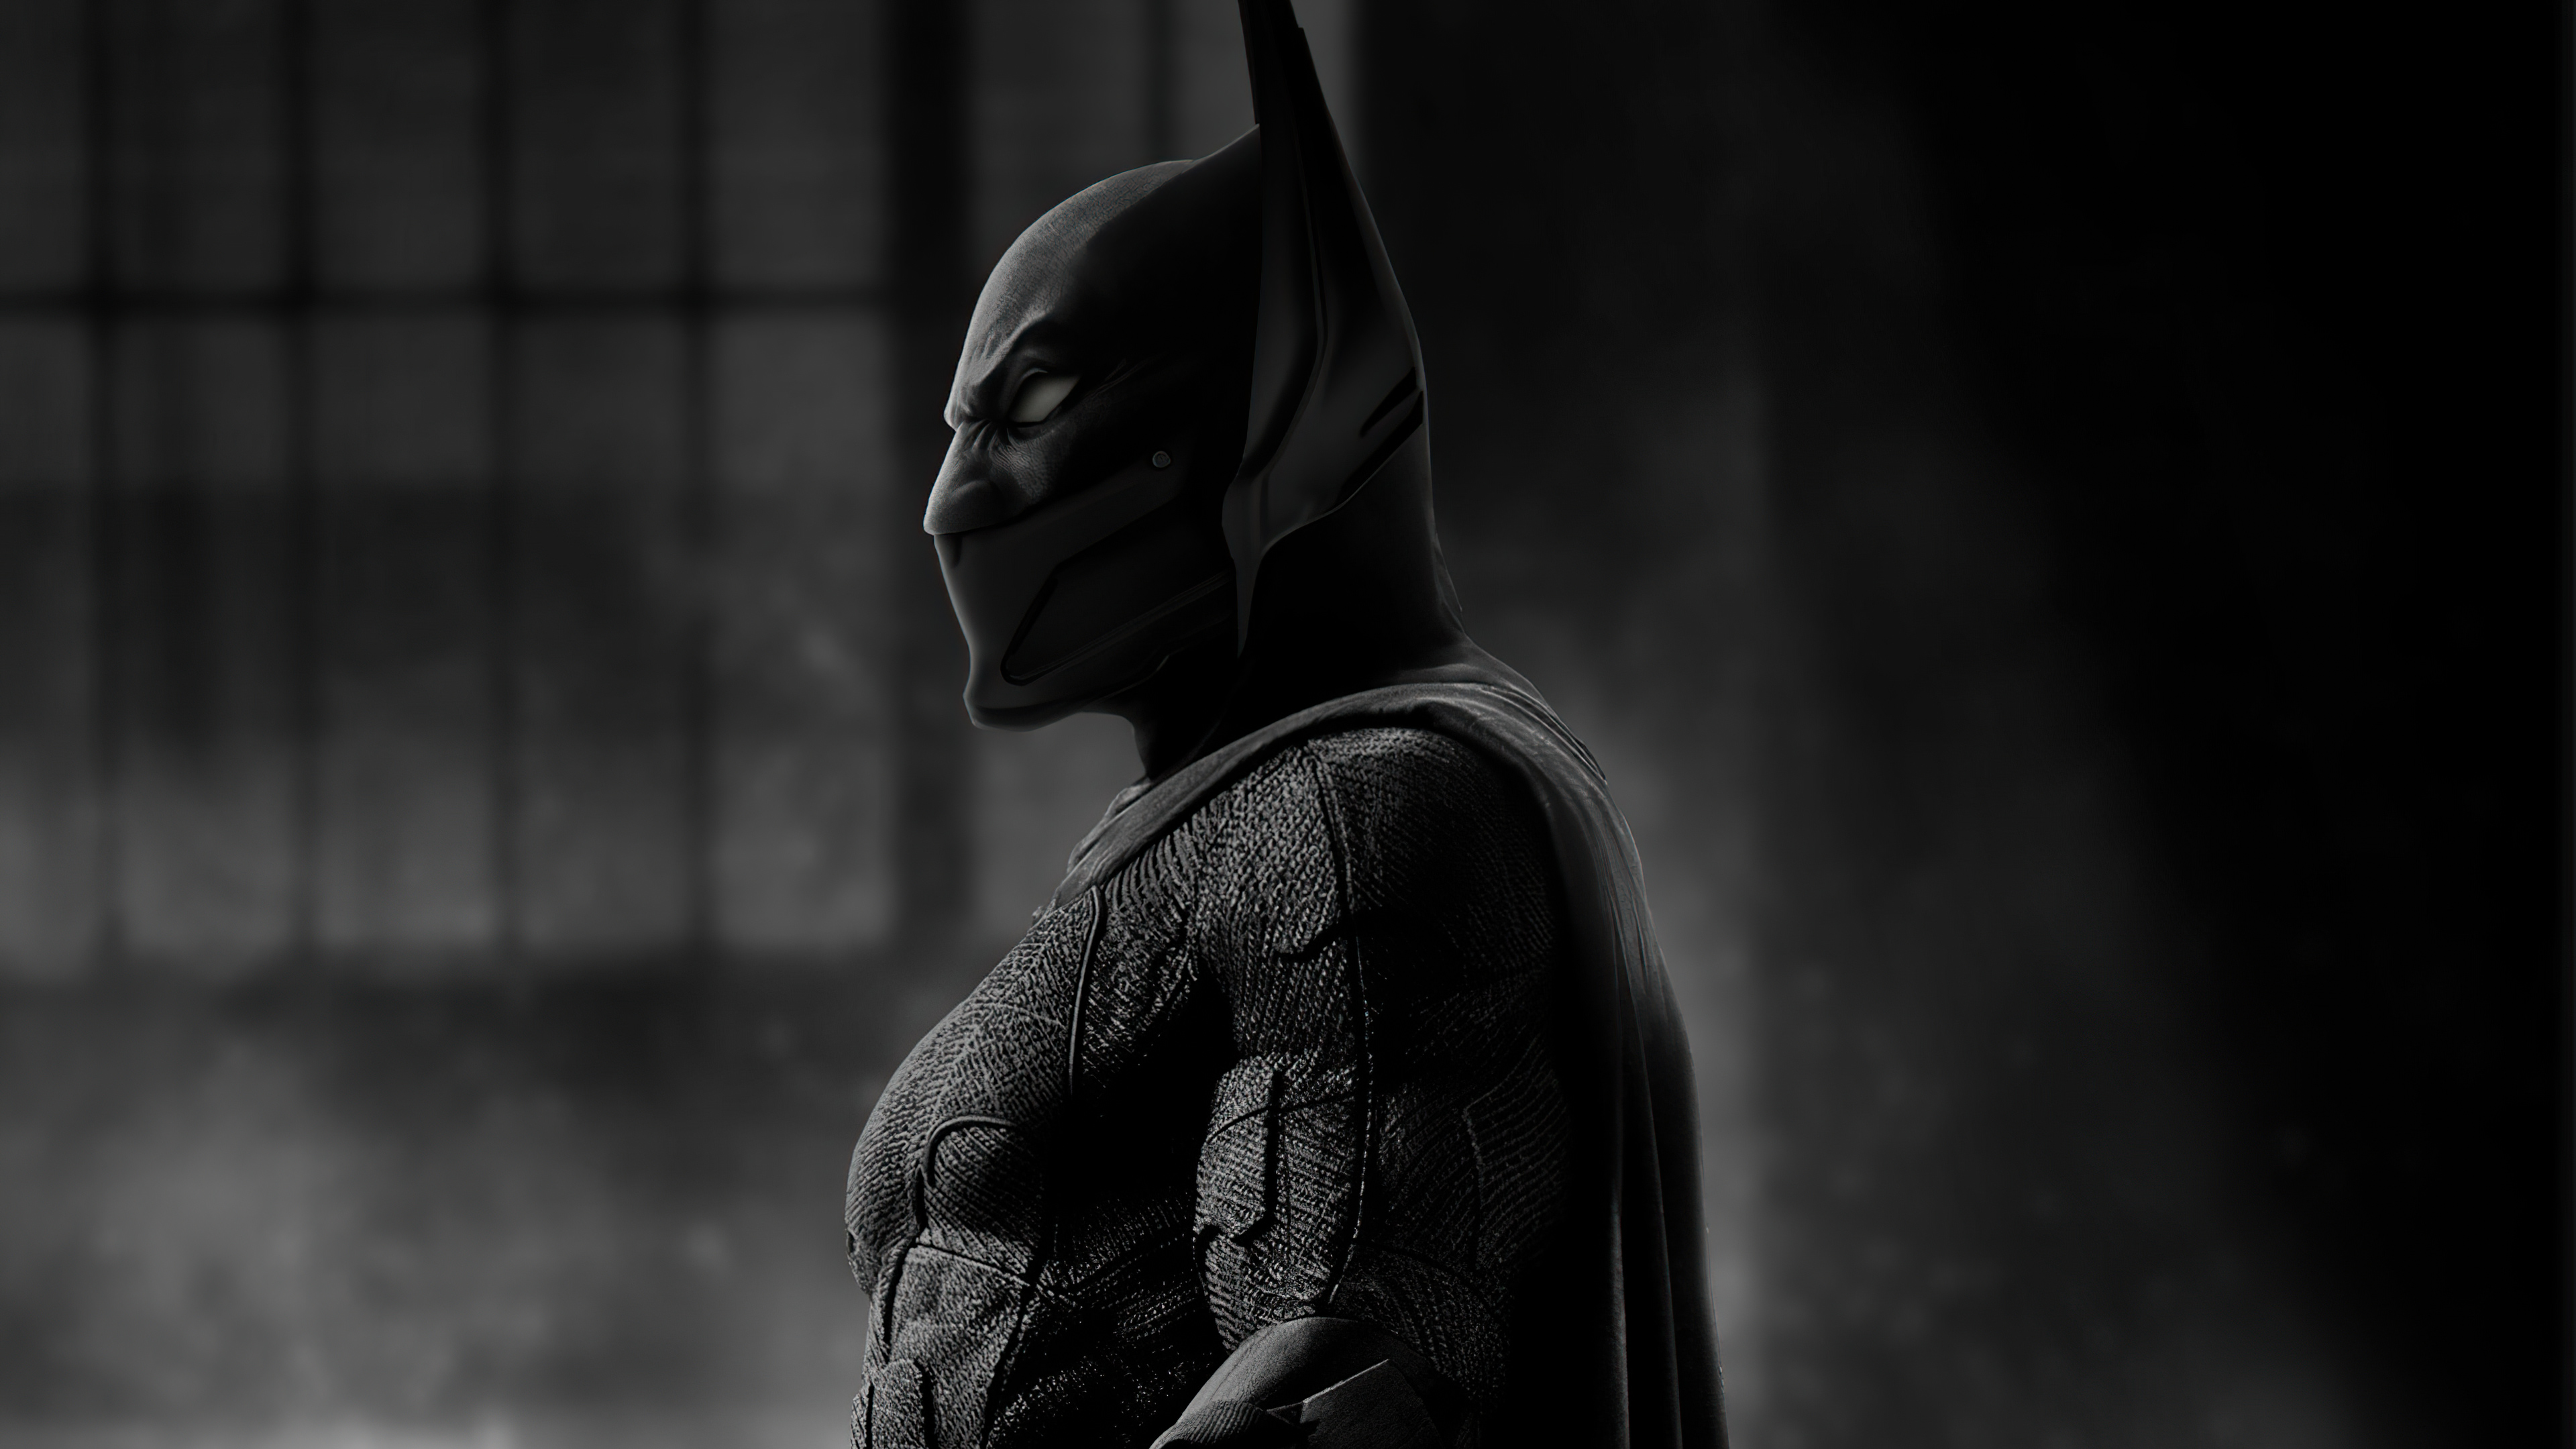 Batman Dark Knight Hero Laptop Full HD 1080P HD 4k Wallpaper, Image, Background, Photo and Picture